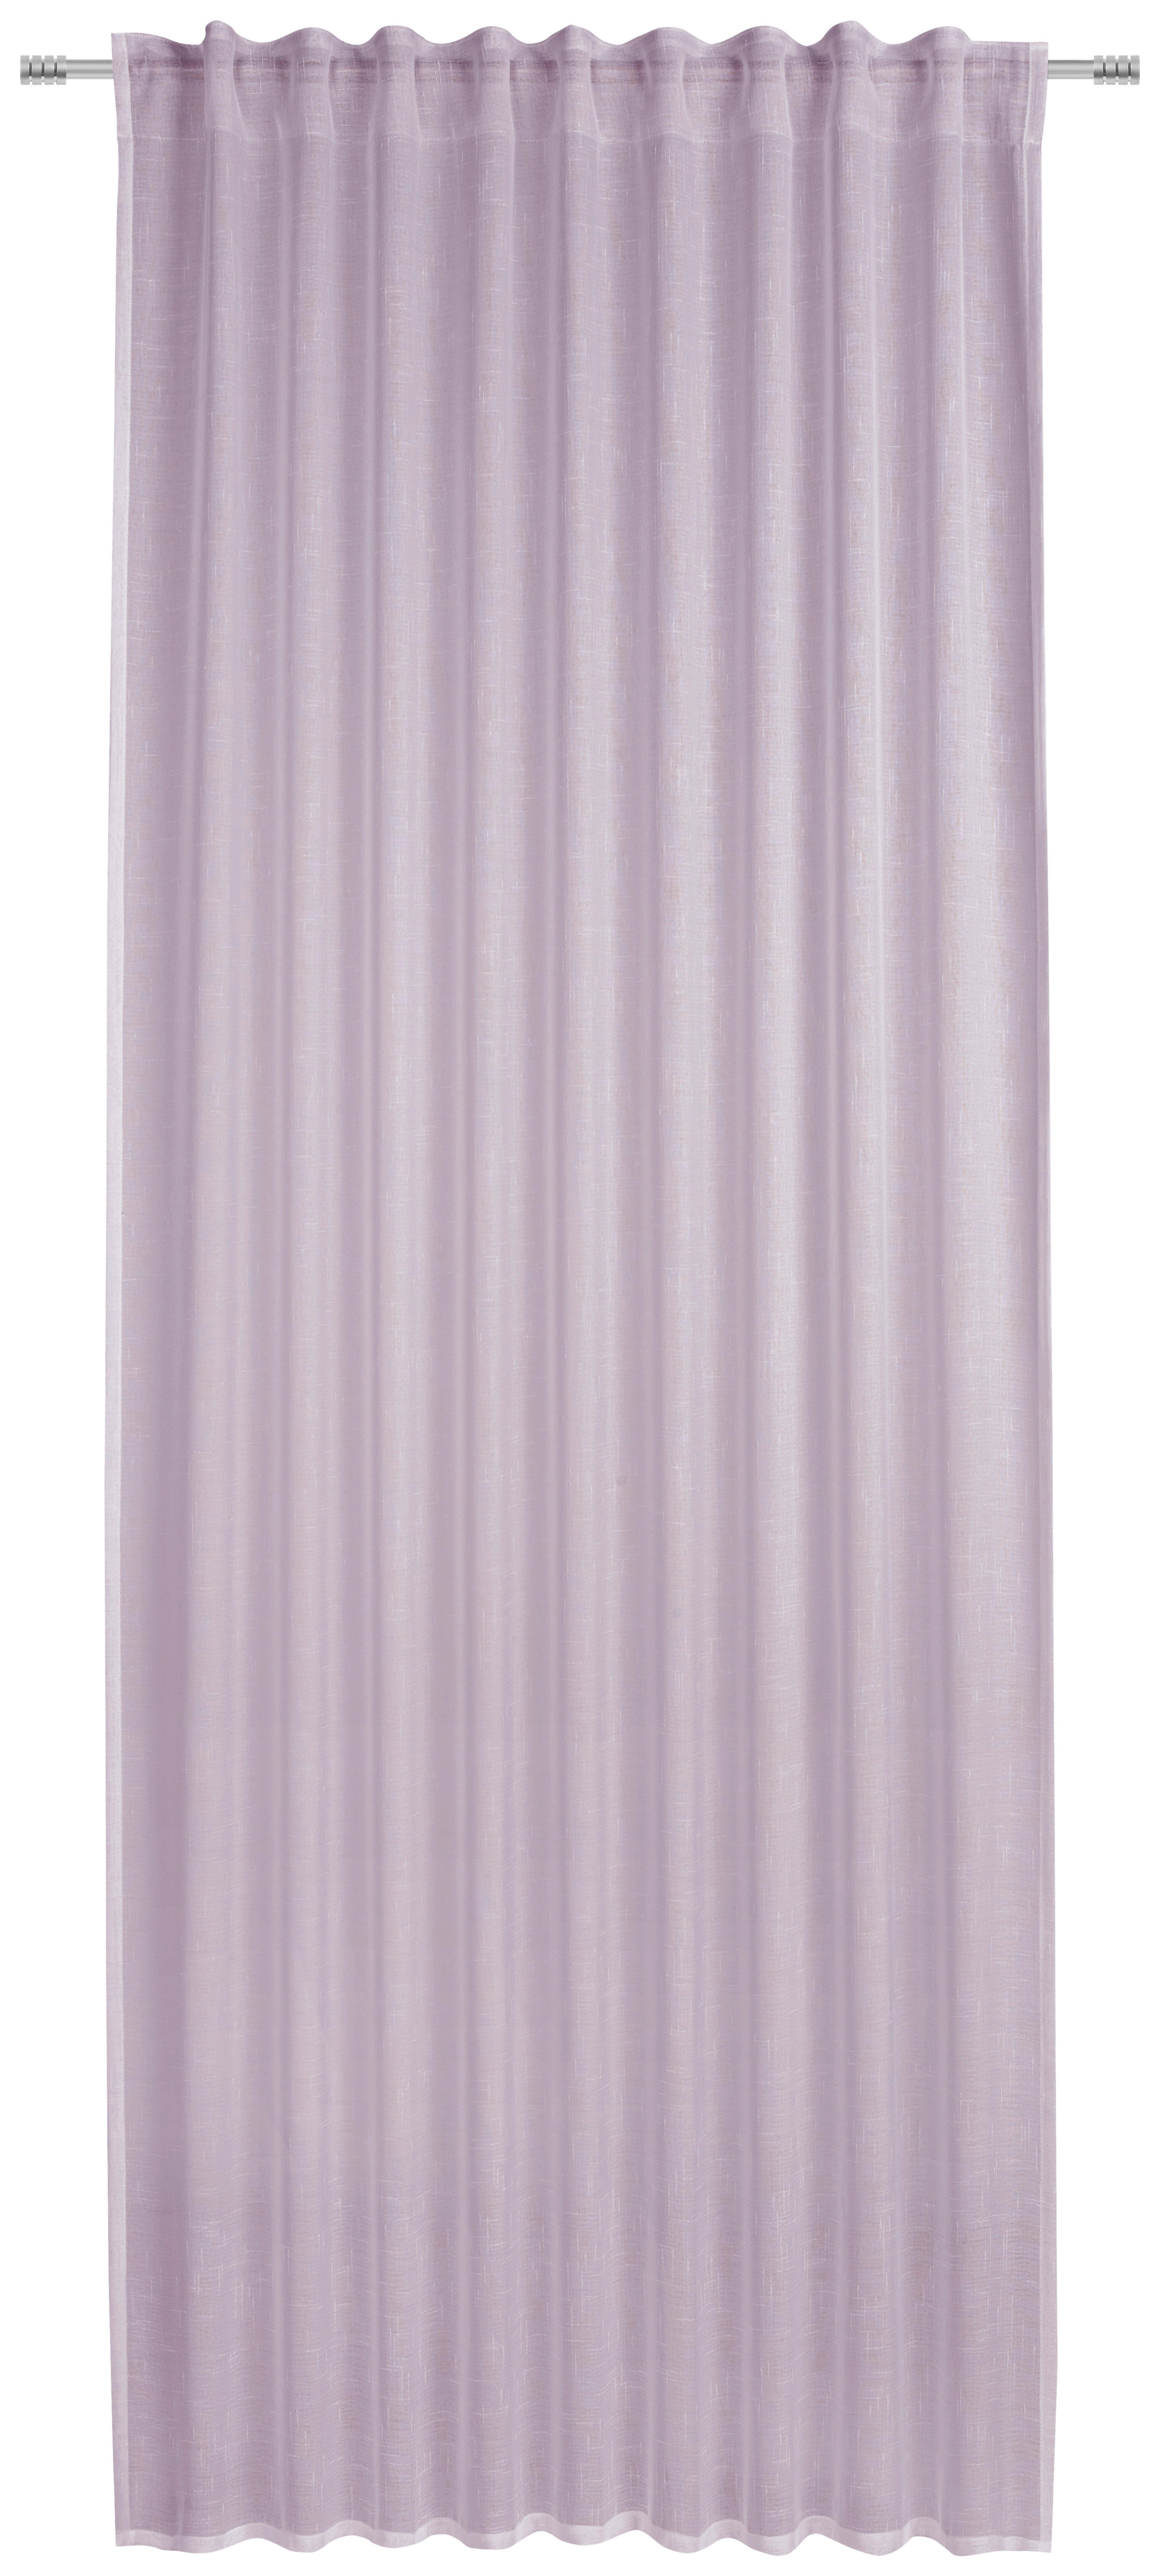 GARDINLÄNGD halvtransparent  - lila, Basics, textil (135/245cm) - Esposa